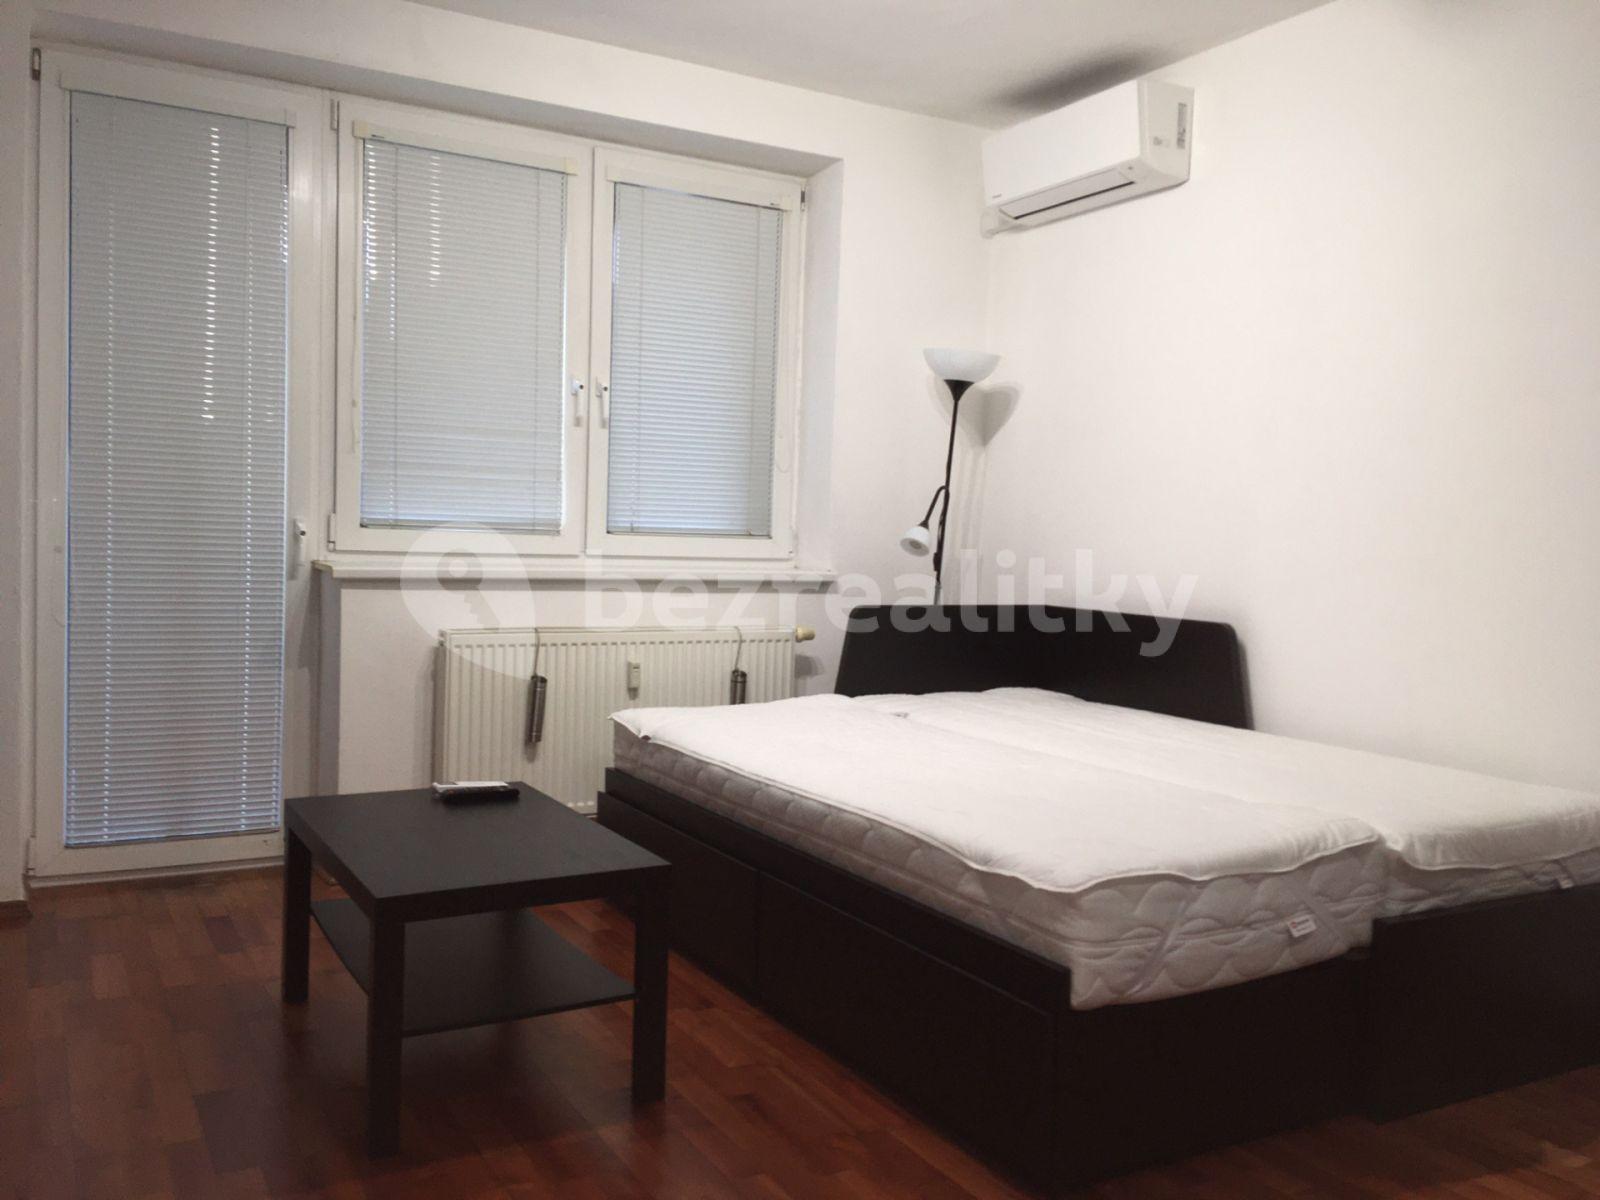 1 bedroom flat to rent, 37 m², Šachorová, Vajnory, Bratislavský Region